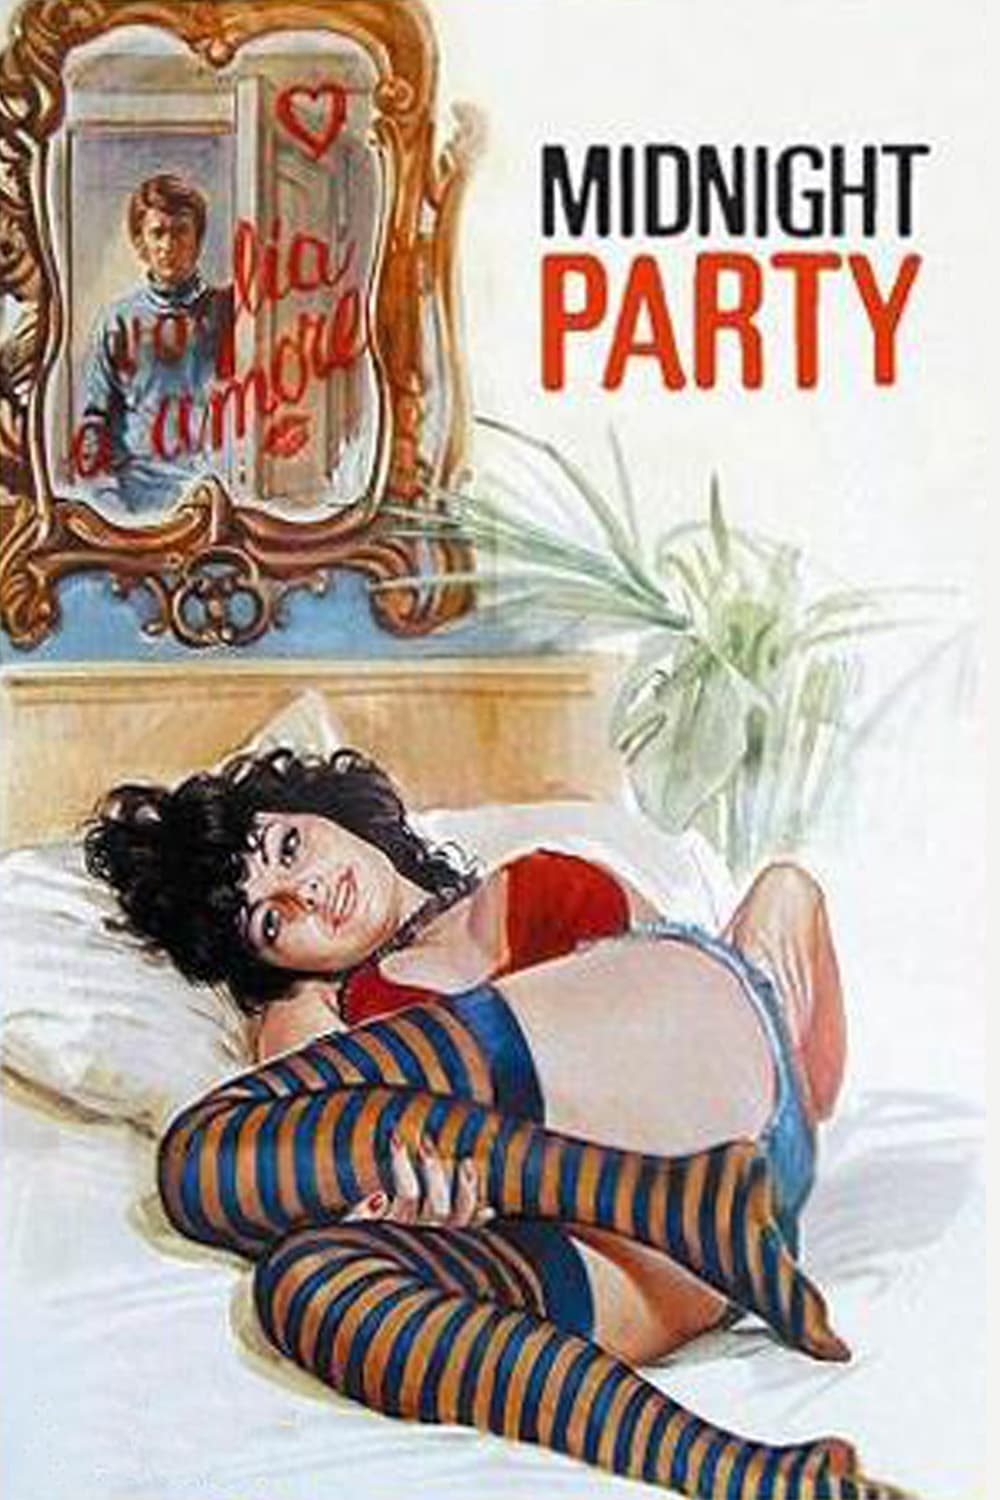 Lady Porno (1976)